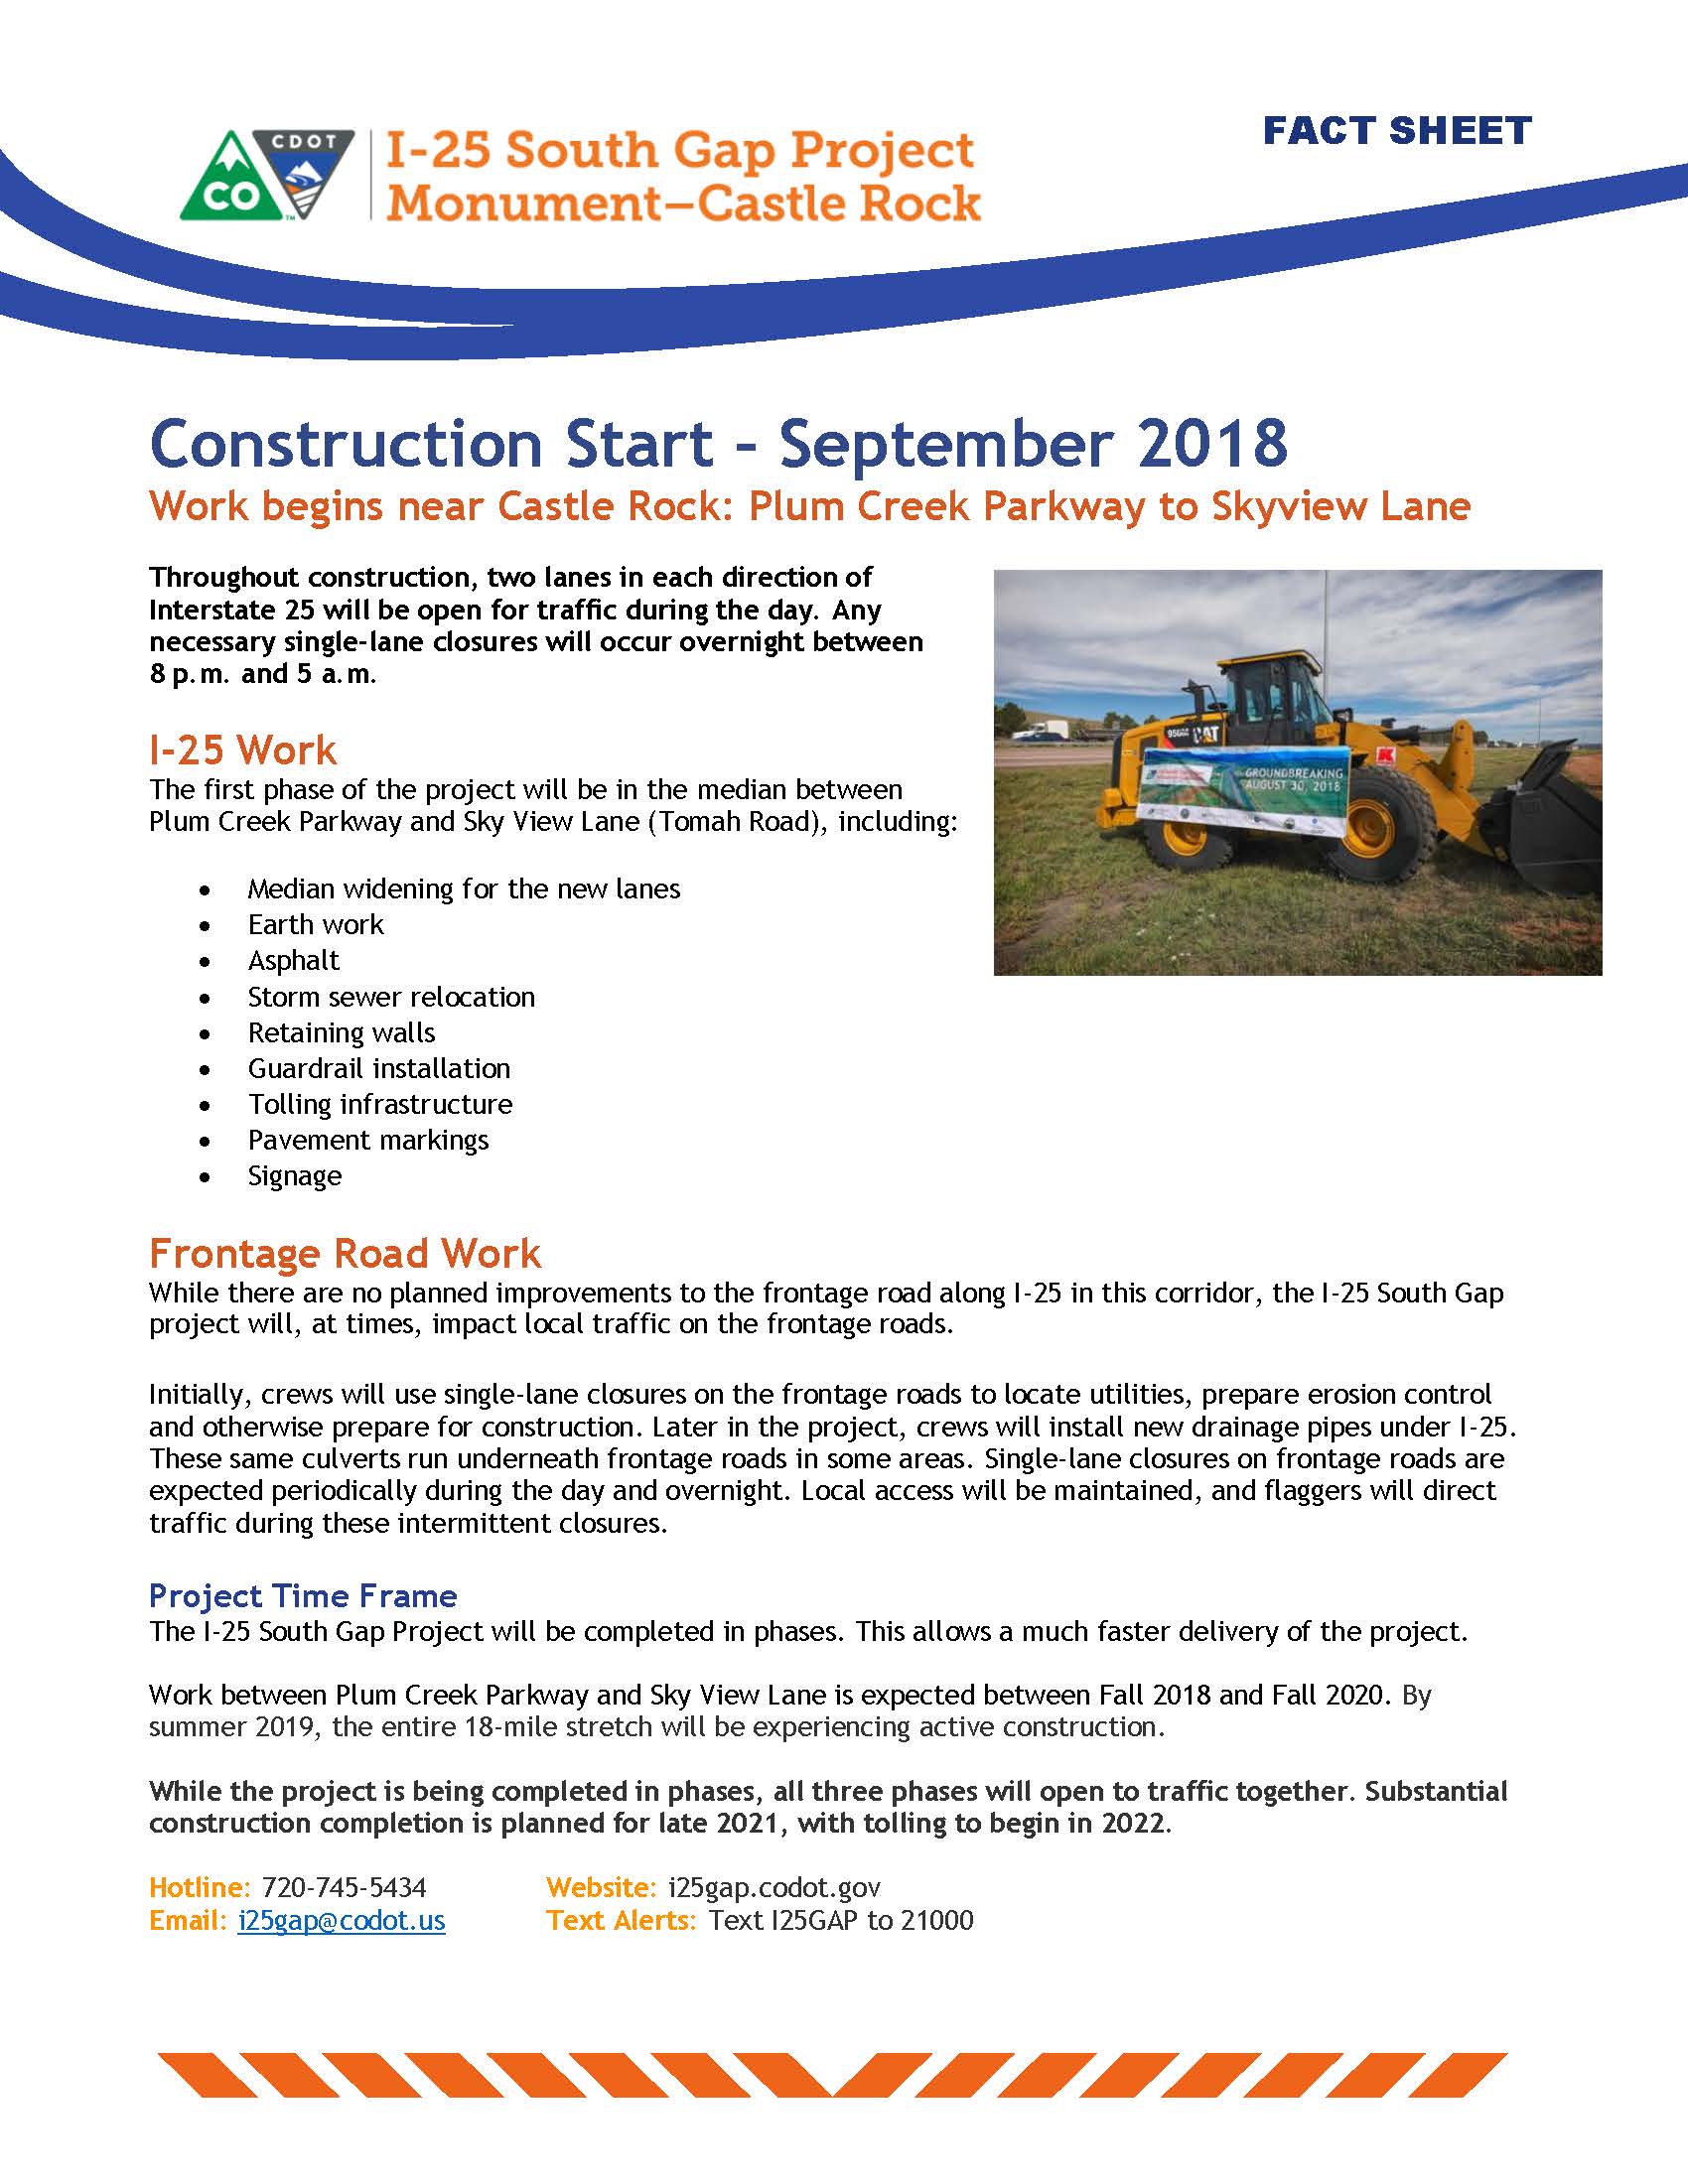 Construction Start Fact Sheet Cover.jpg detail image